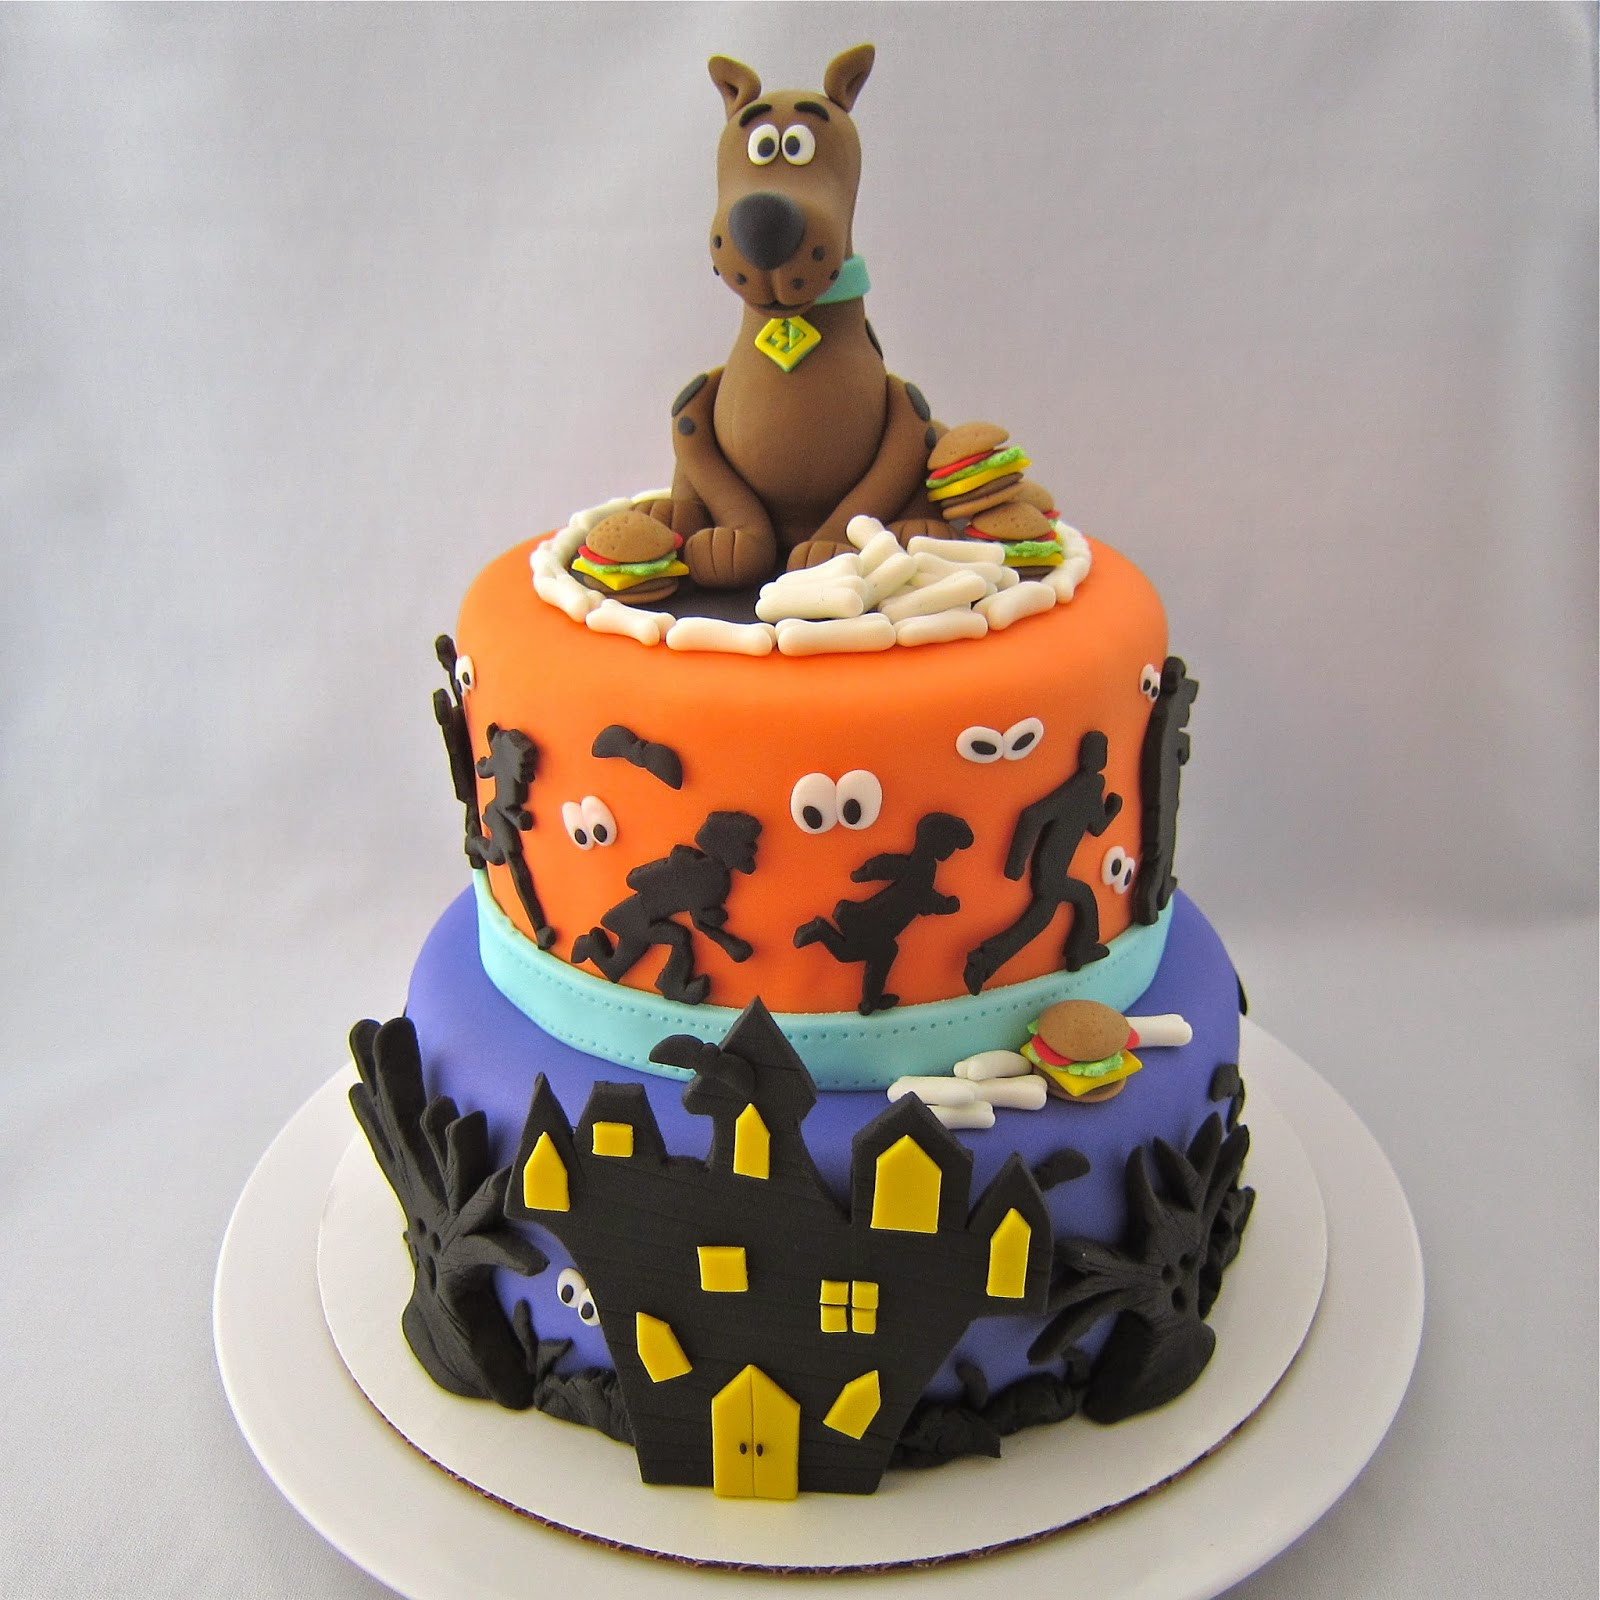 Scooby Doo Birthday Cake
 Clever Wren Scooby Doo Cake Cake of Cakes